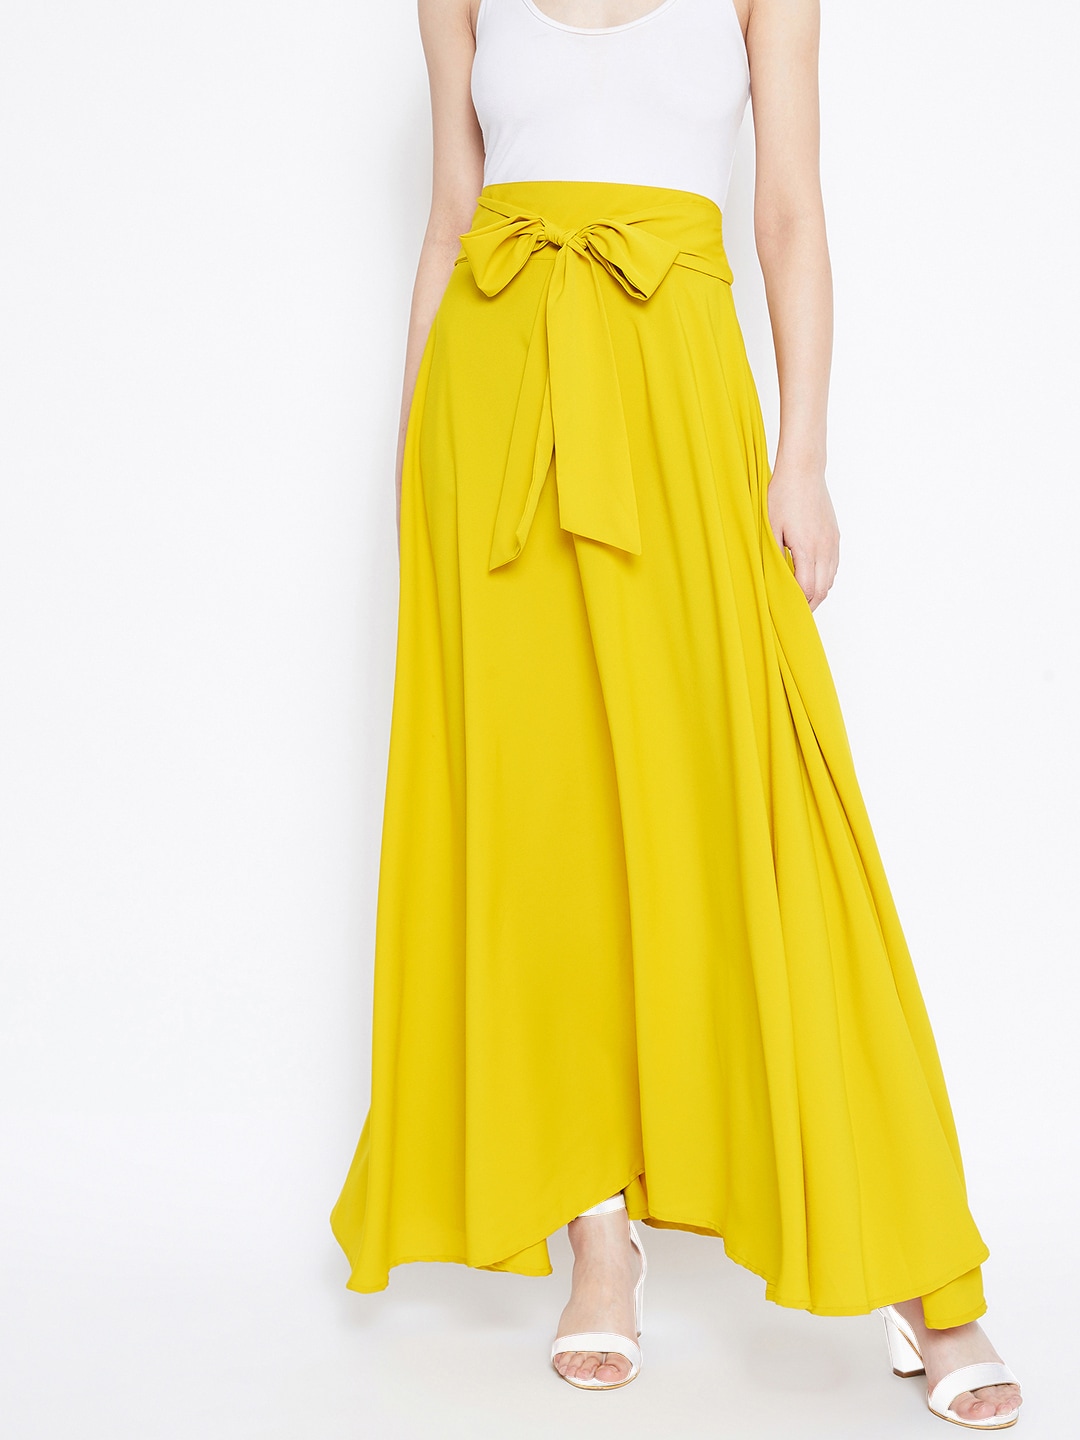 Berrylush Yellow Flared Maxi Skirt Price in India